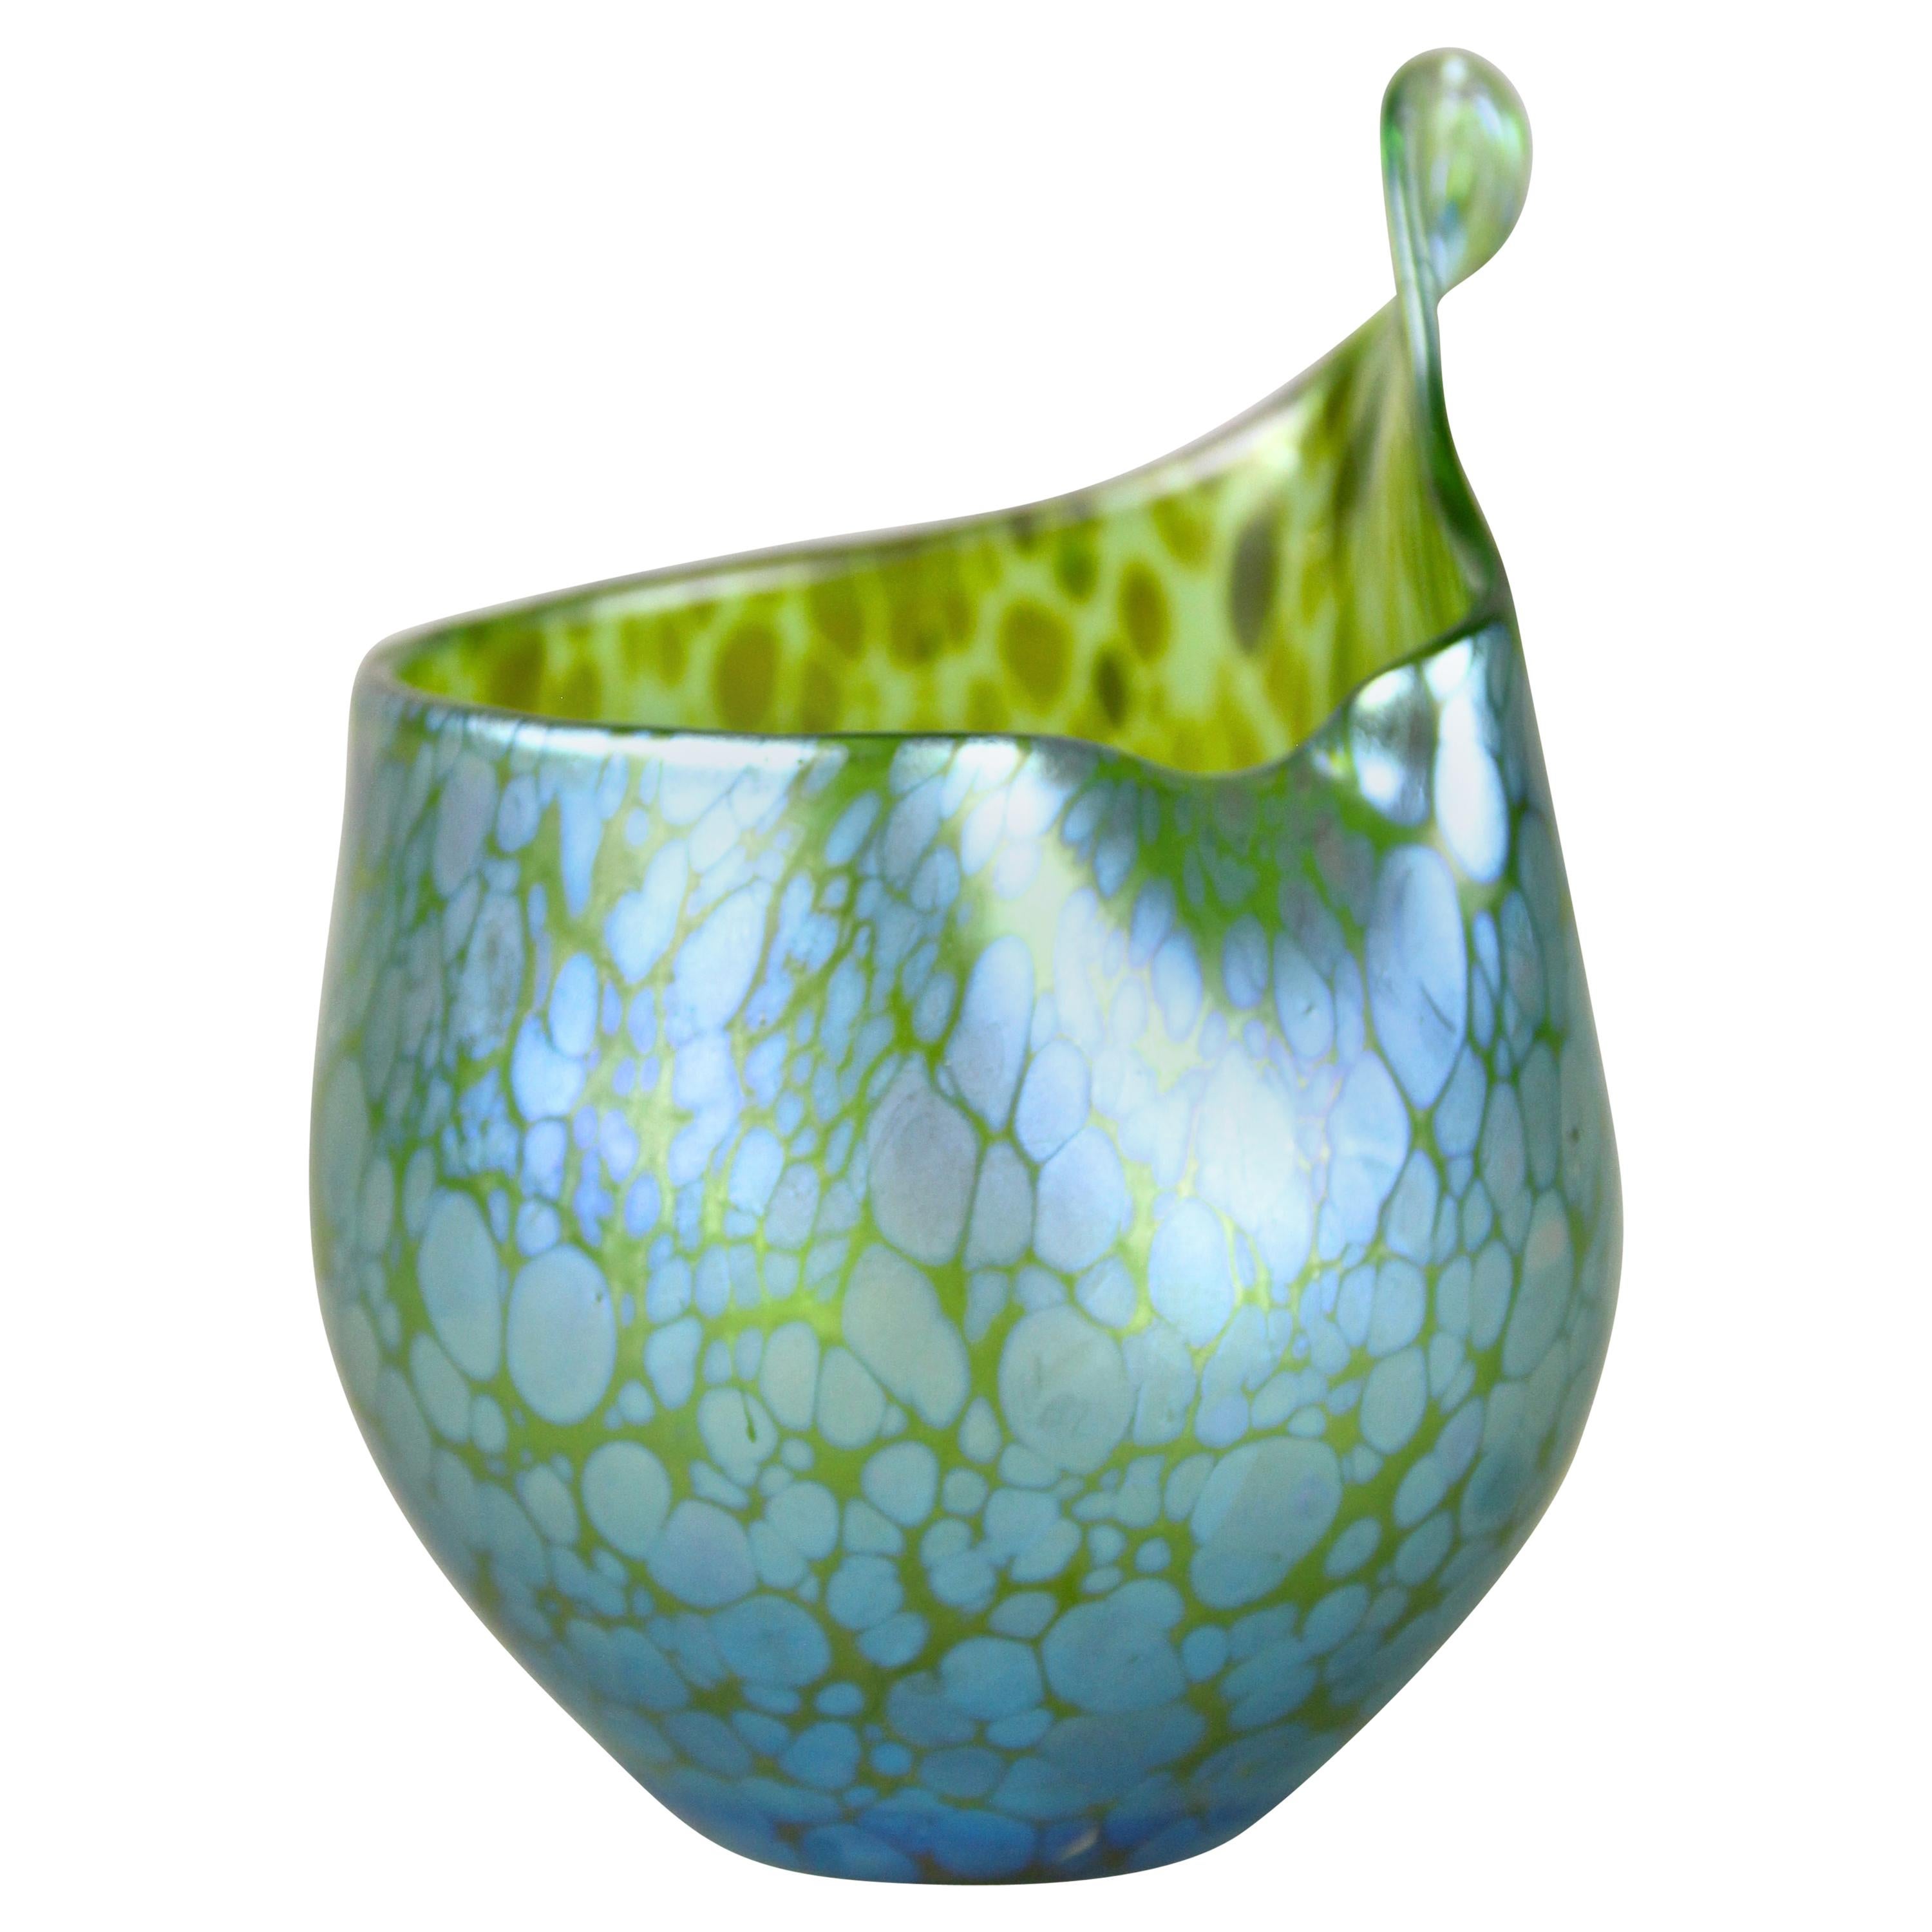 Loetz Witwe Glass Vase Decor "Creta Papillon" Iriscident, Bohemia, circa 1902